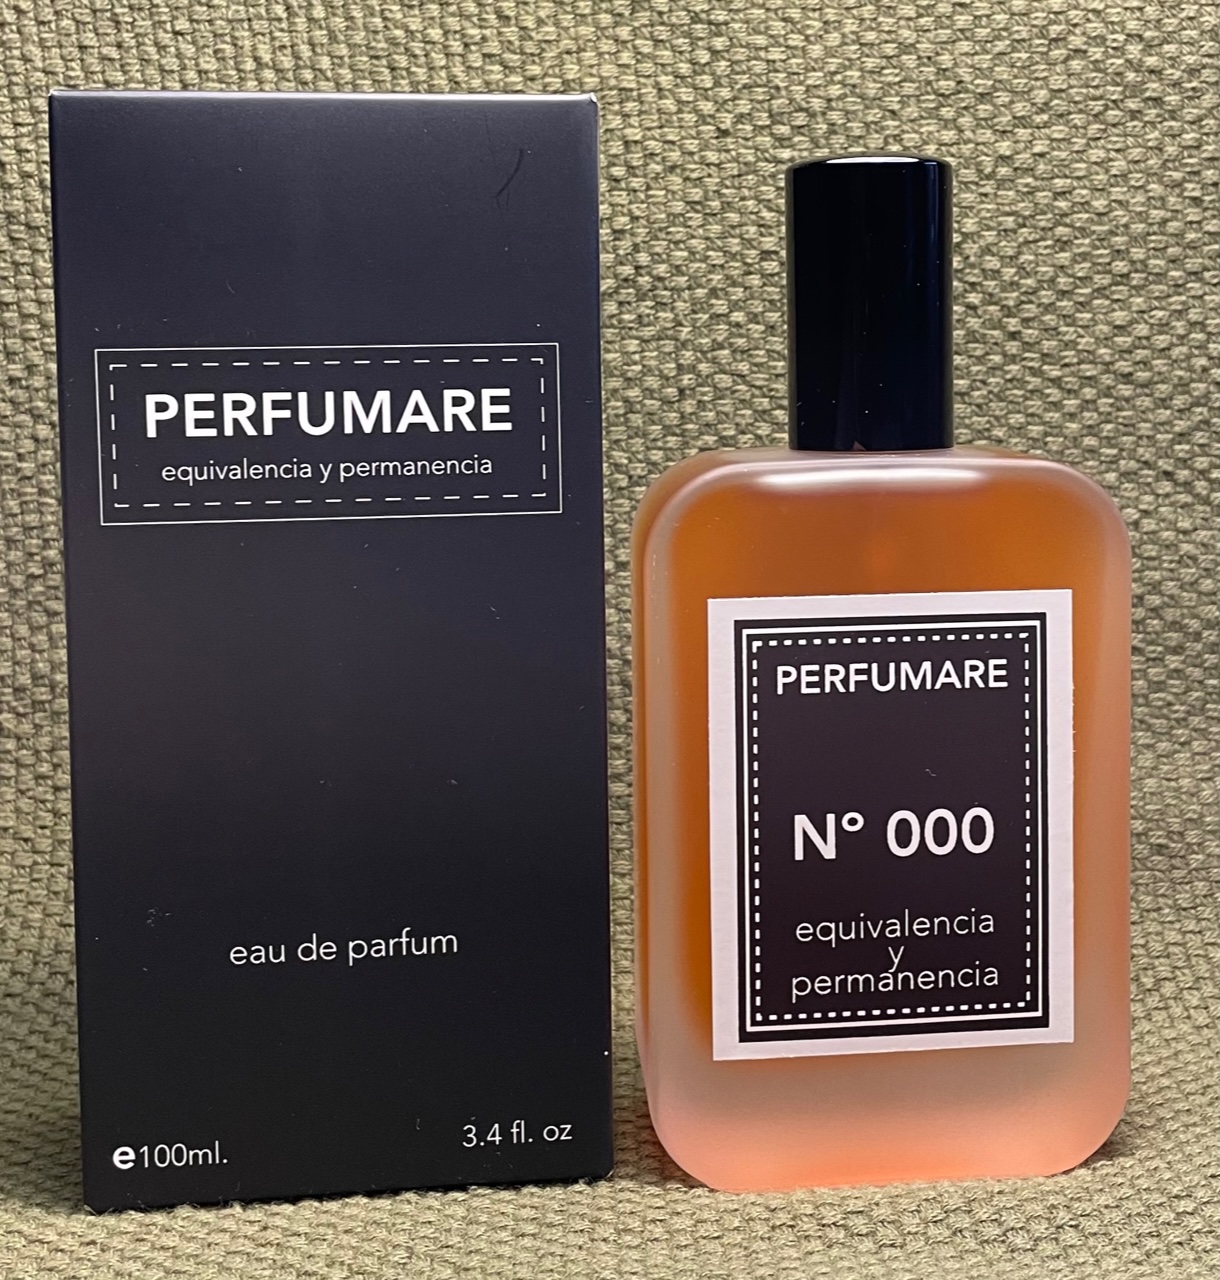 LOUIS VUITTON archivos - Perfumare